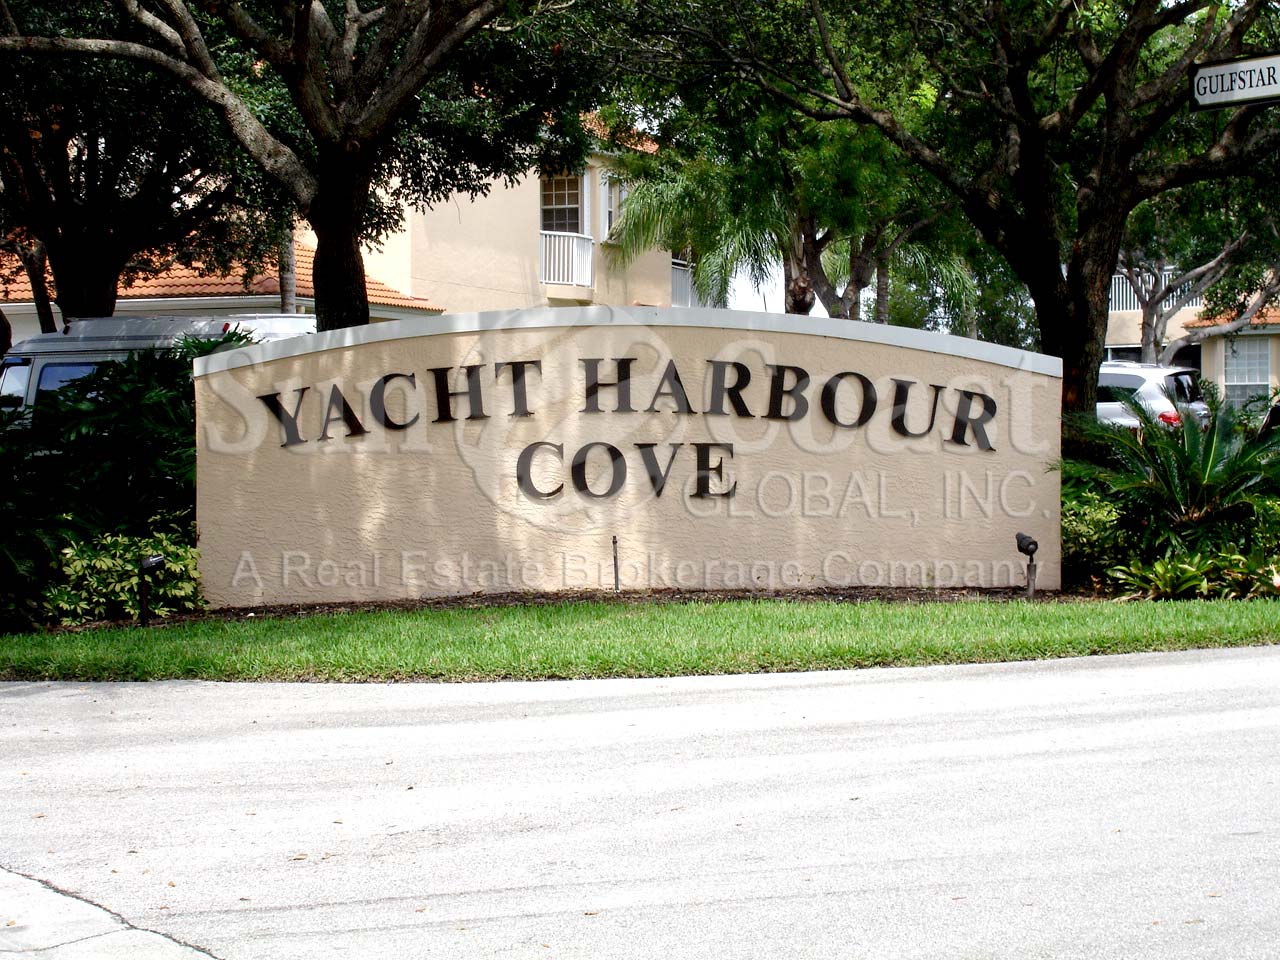 Yacht Harbour Cove entrance sign.